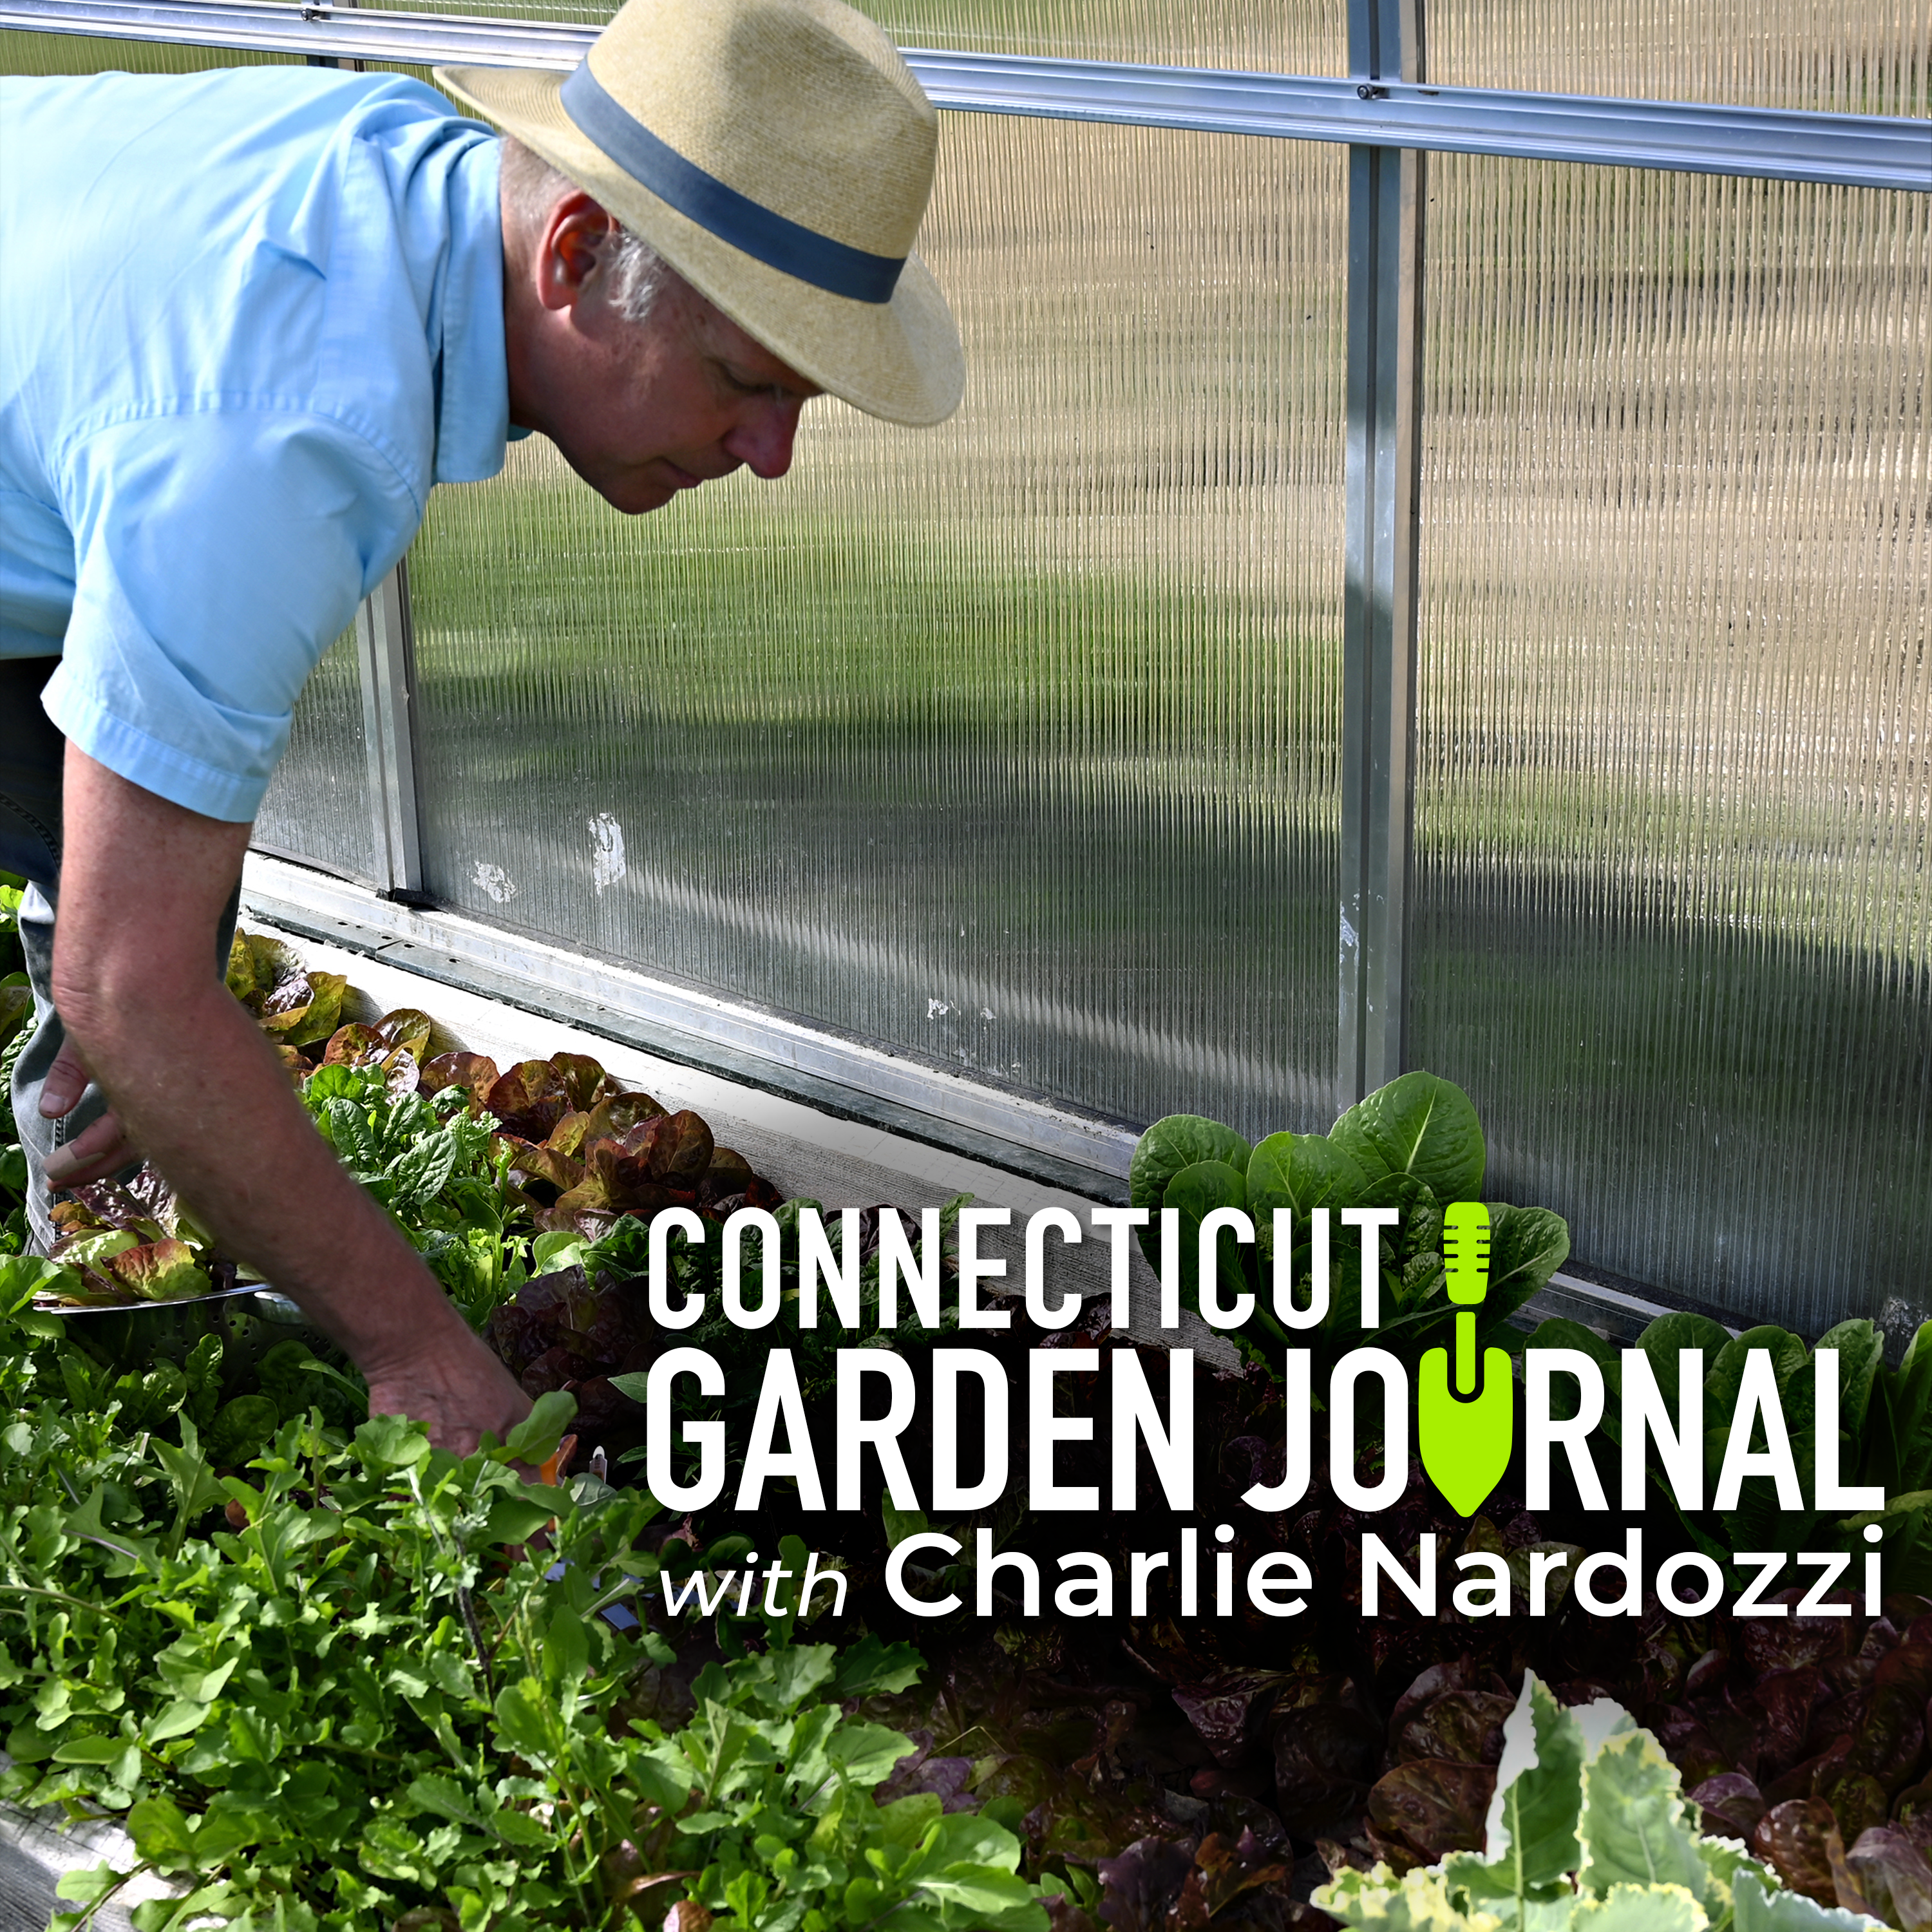 Connecticut Garden Journal: Grow a hearty summer and fall favorite - Dahlias